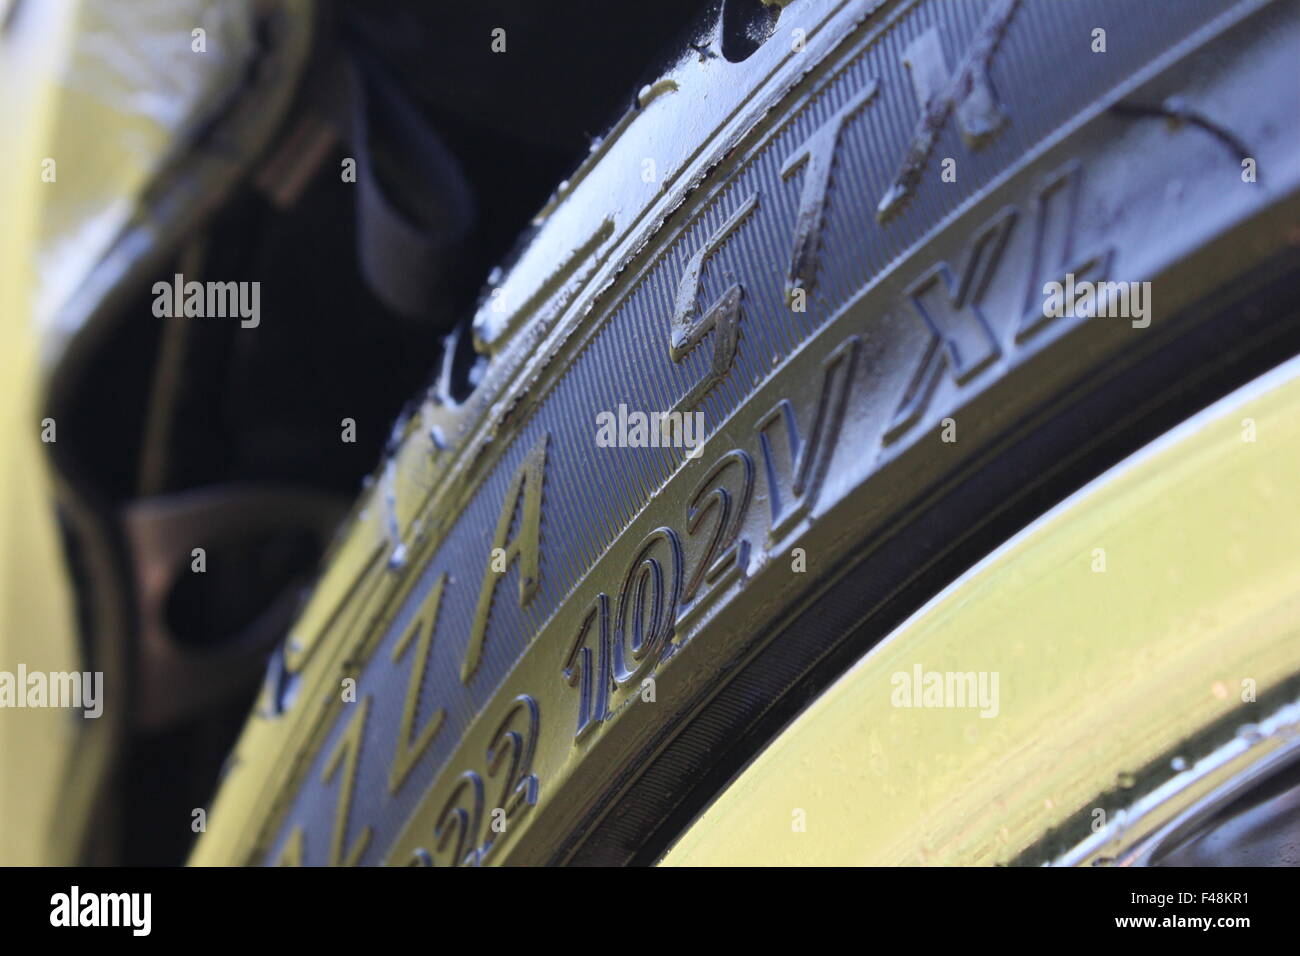 Closeup of a car tire. Stock Photo